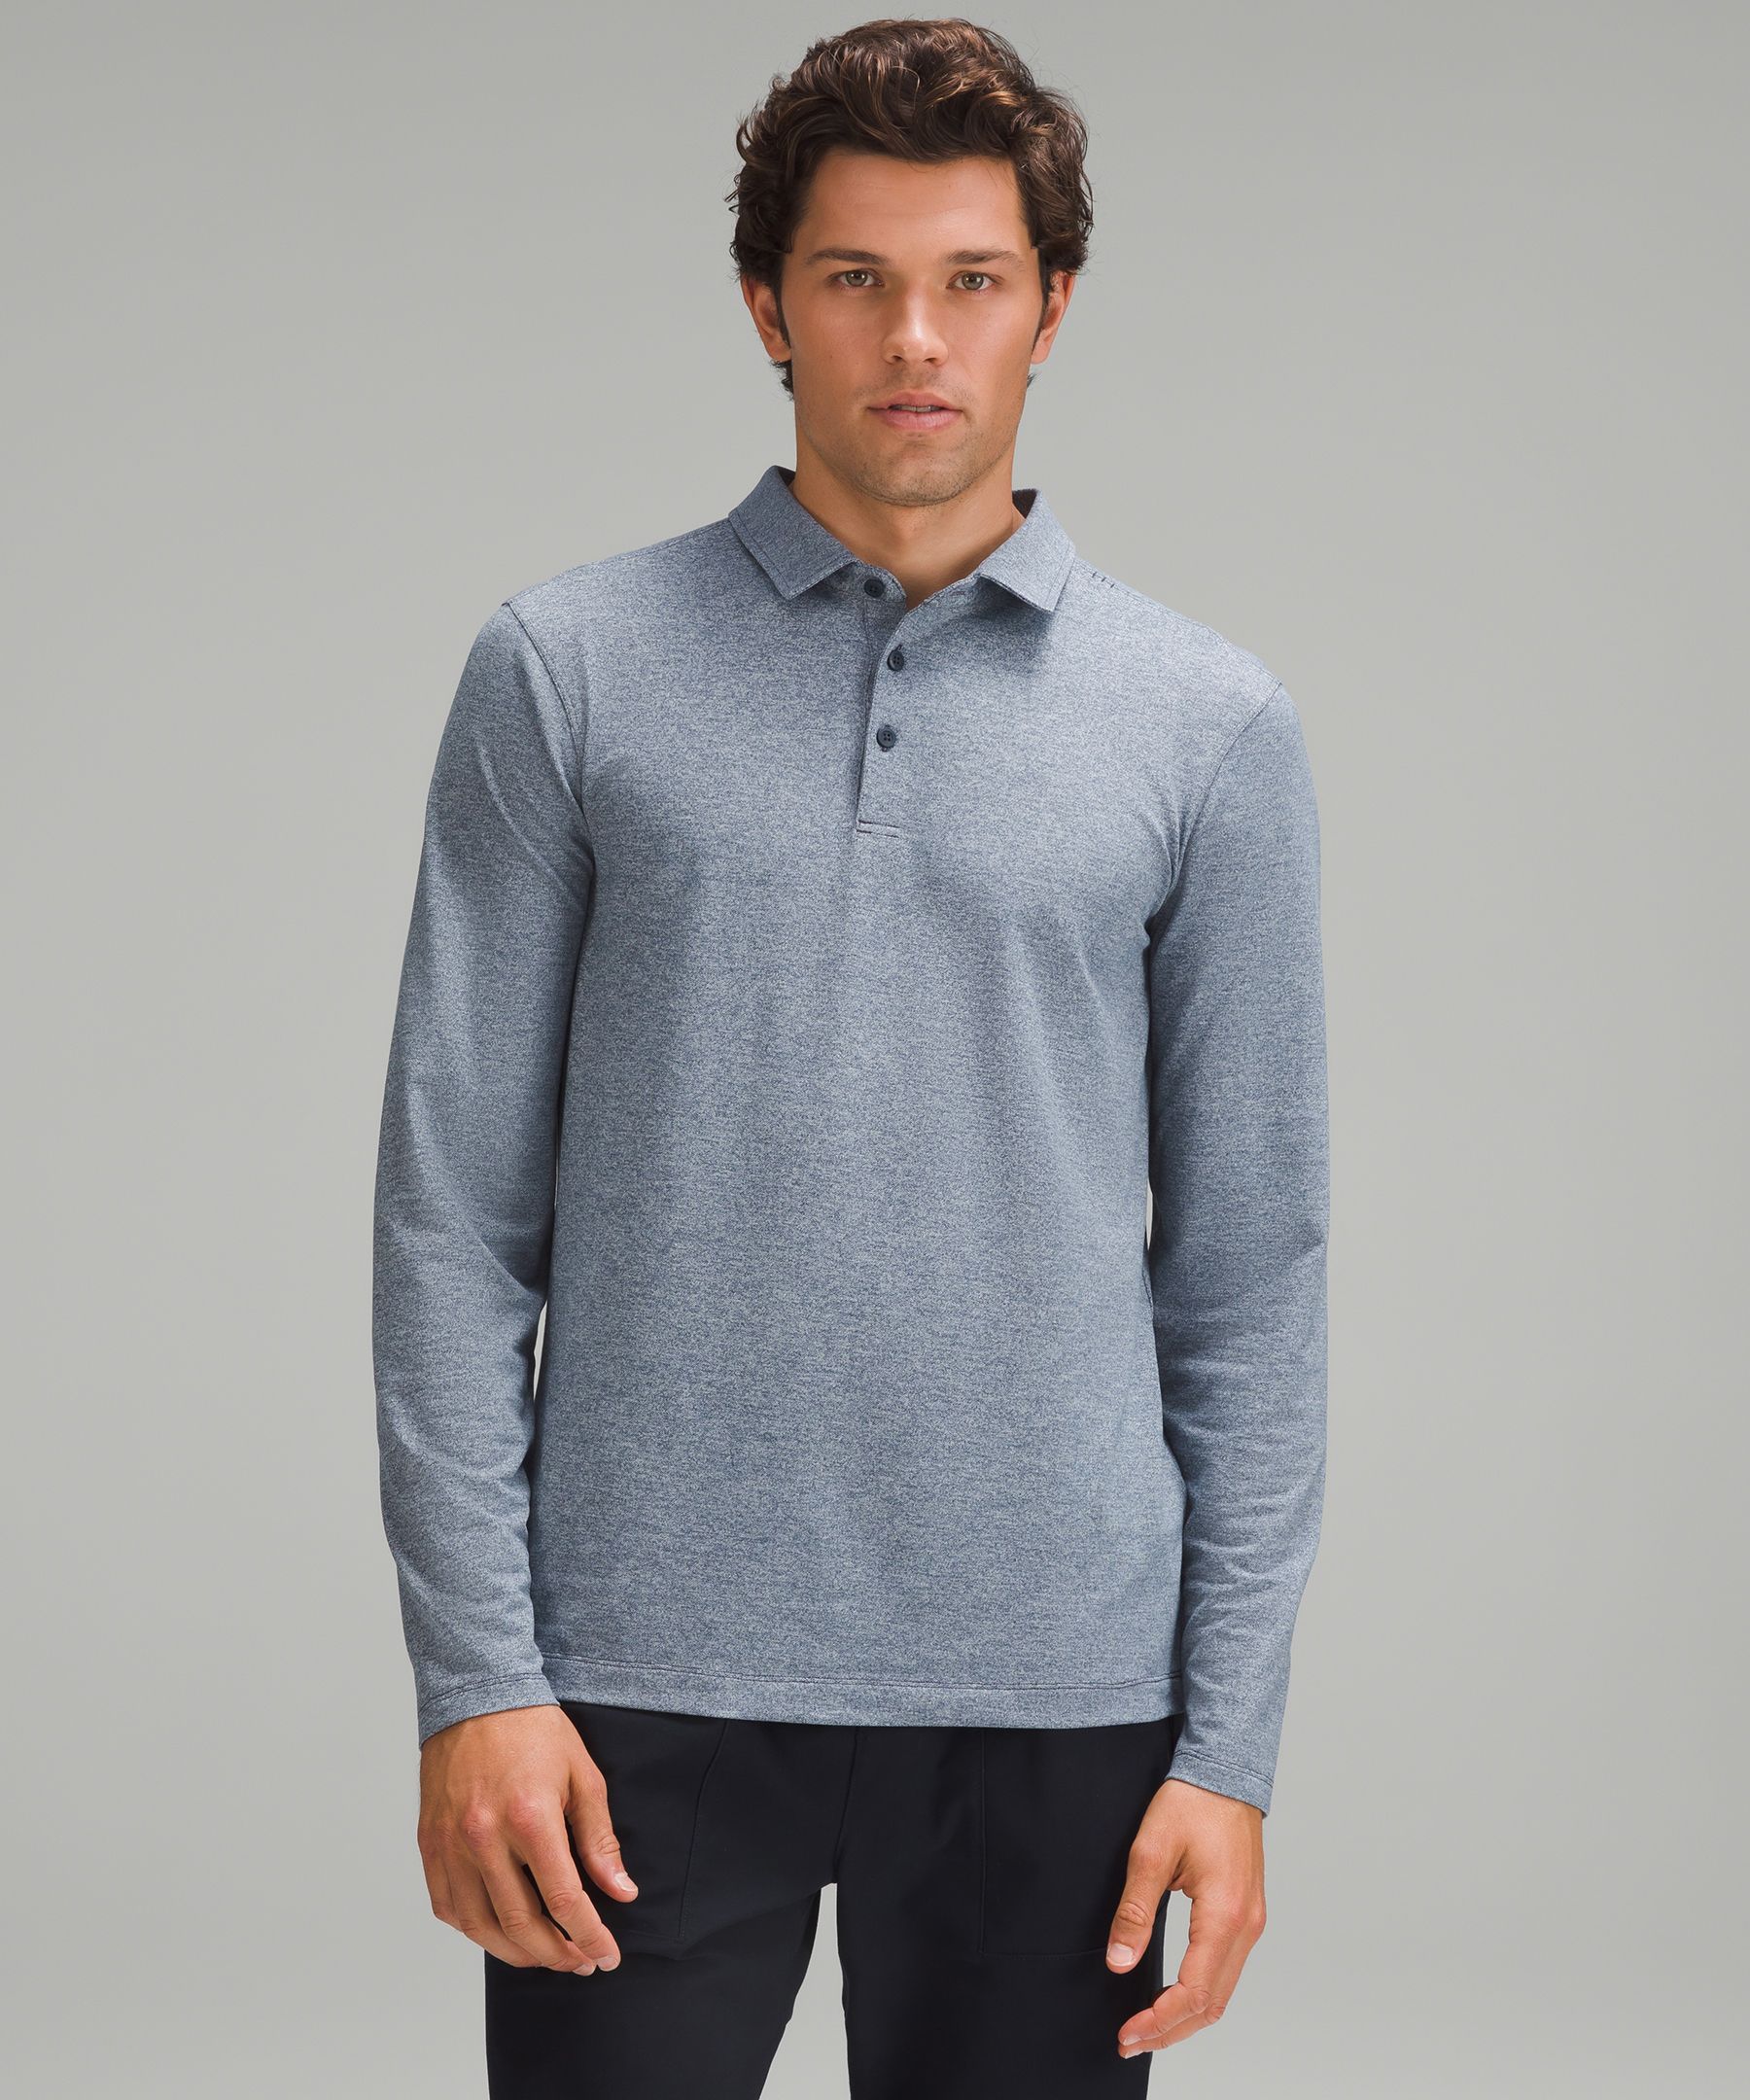 Evolution Long Sleeve Polo Shirt *Pique   Men's Long Sleeve Shirts